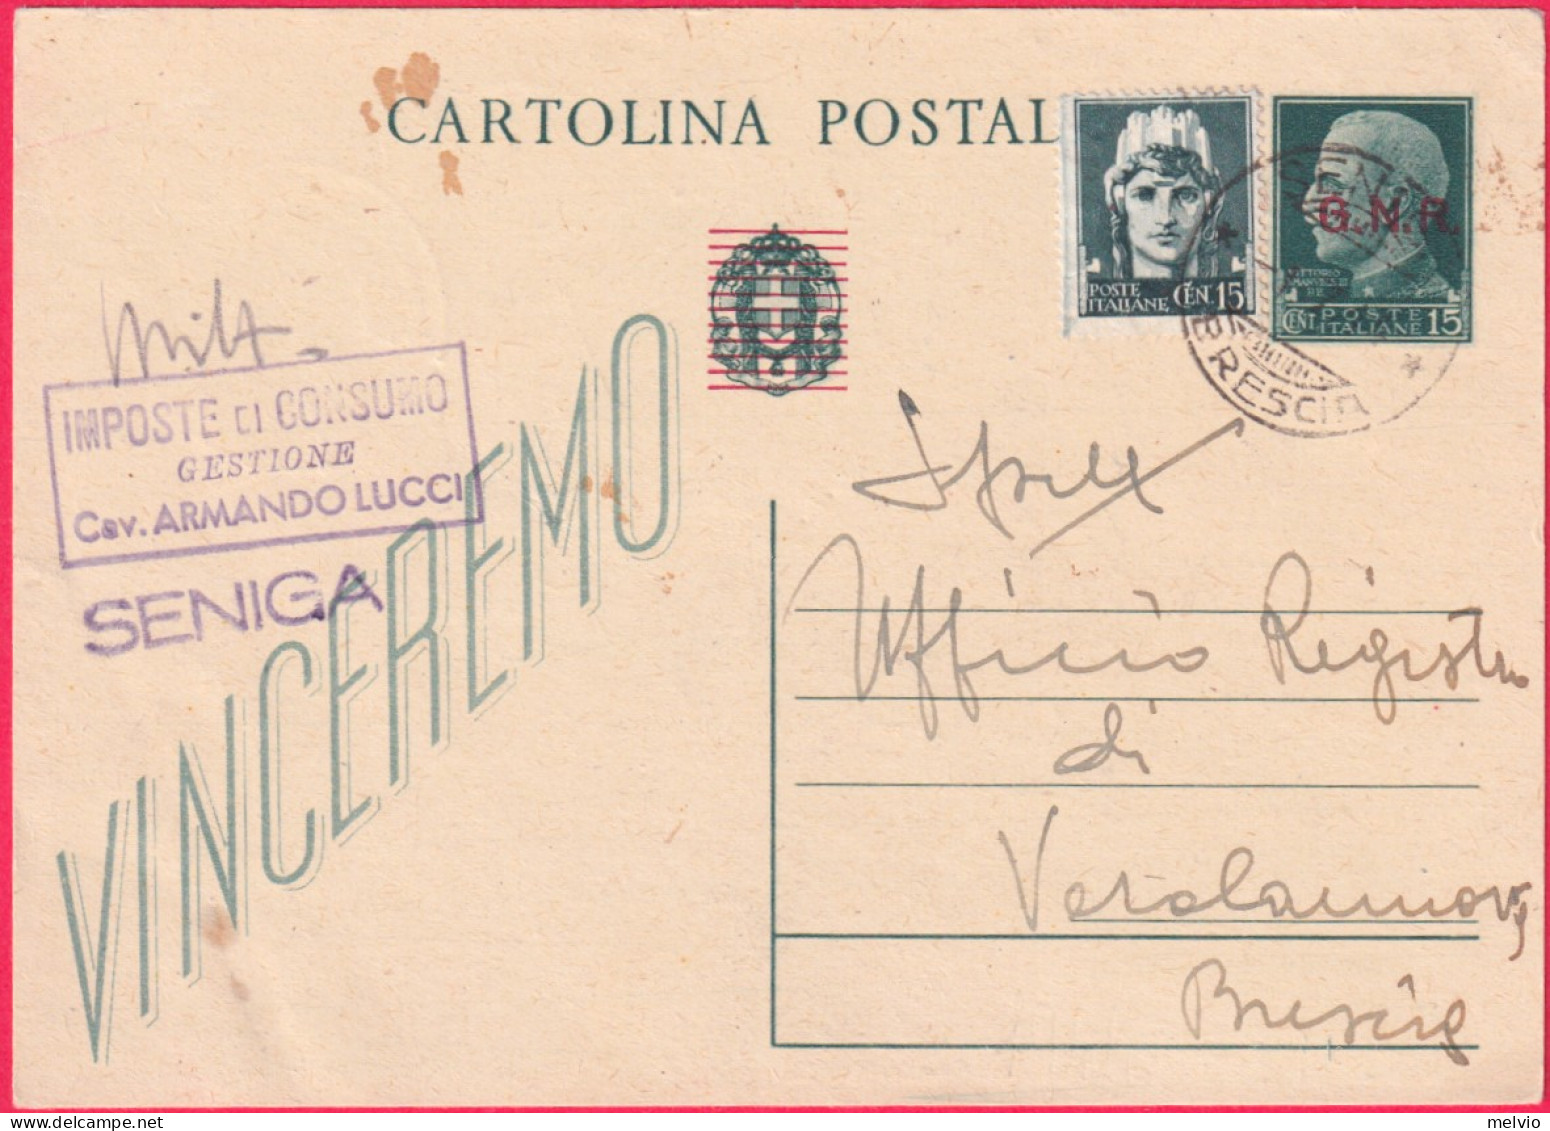 1944-GNR Cartolina Postale 15c. Viaggiata Con Affrancatura Aggiunta 15c.Imperial - Marcofilie